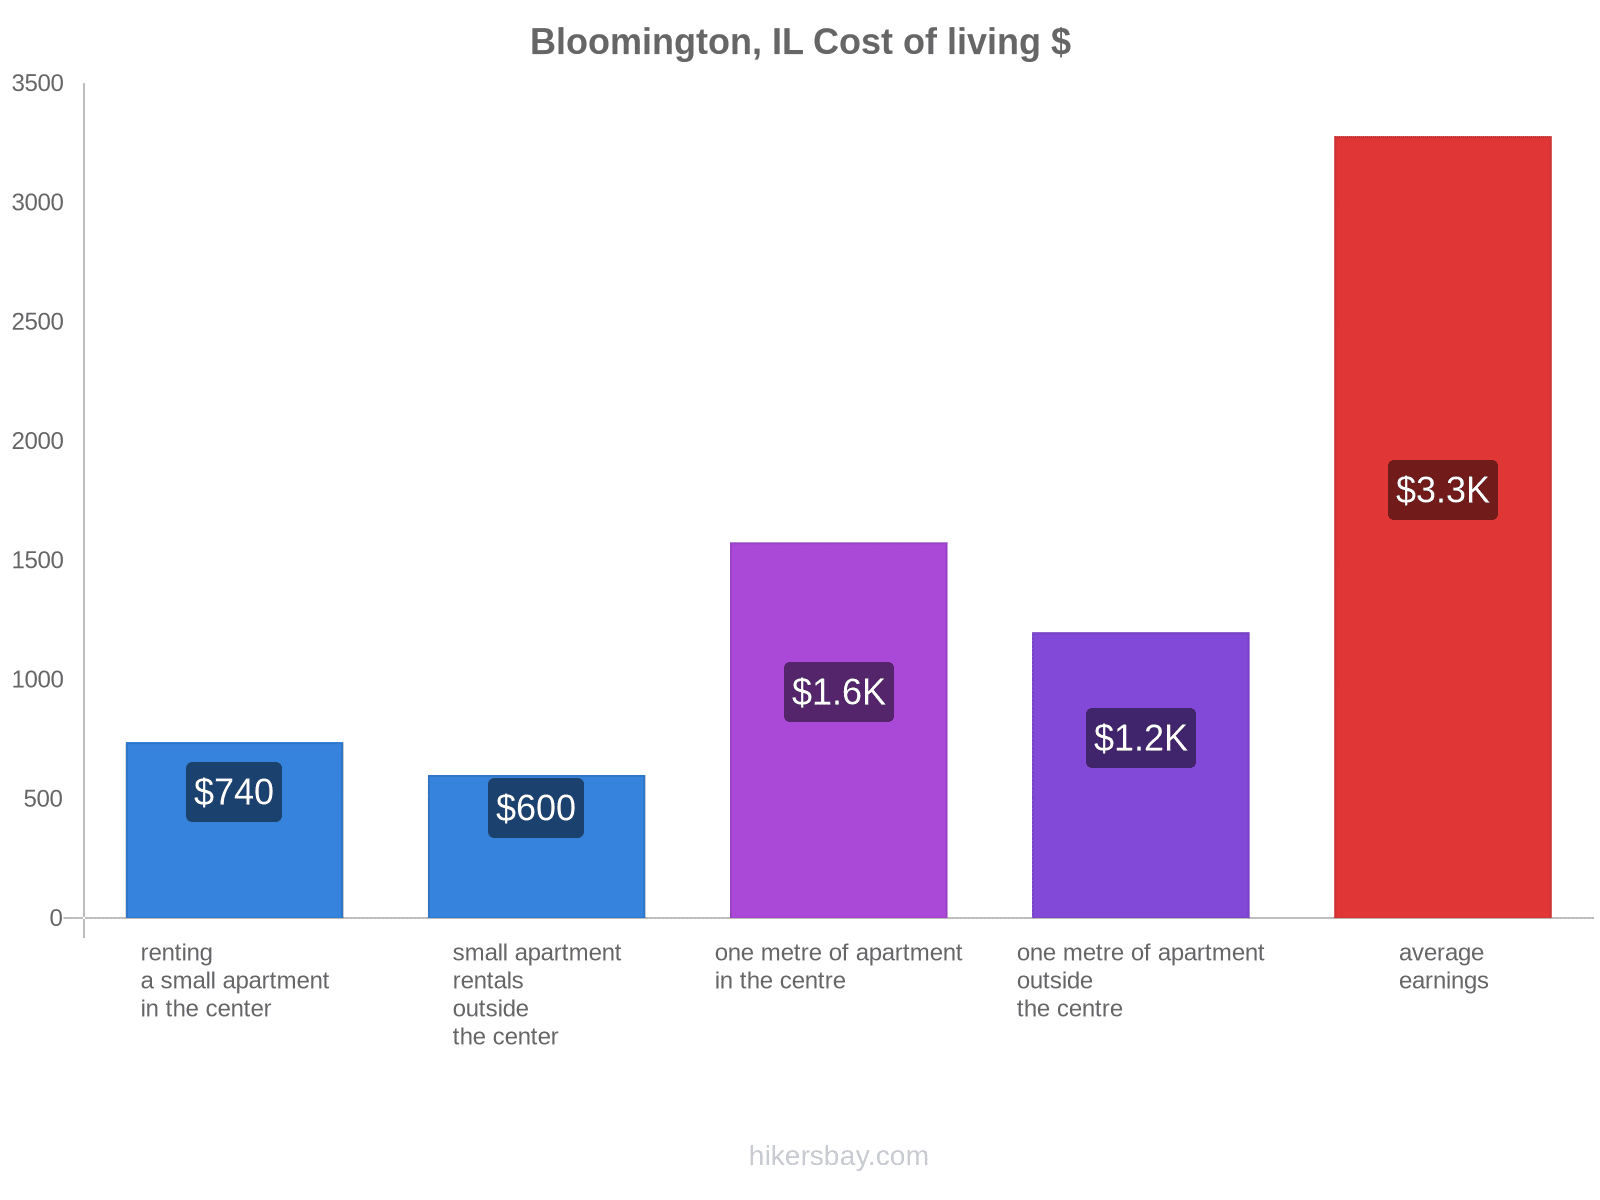 Bloomington, IL cost of living hikersbay.com